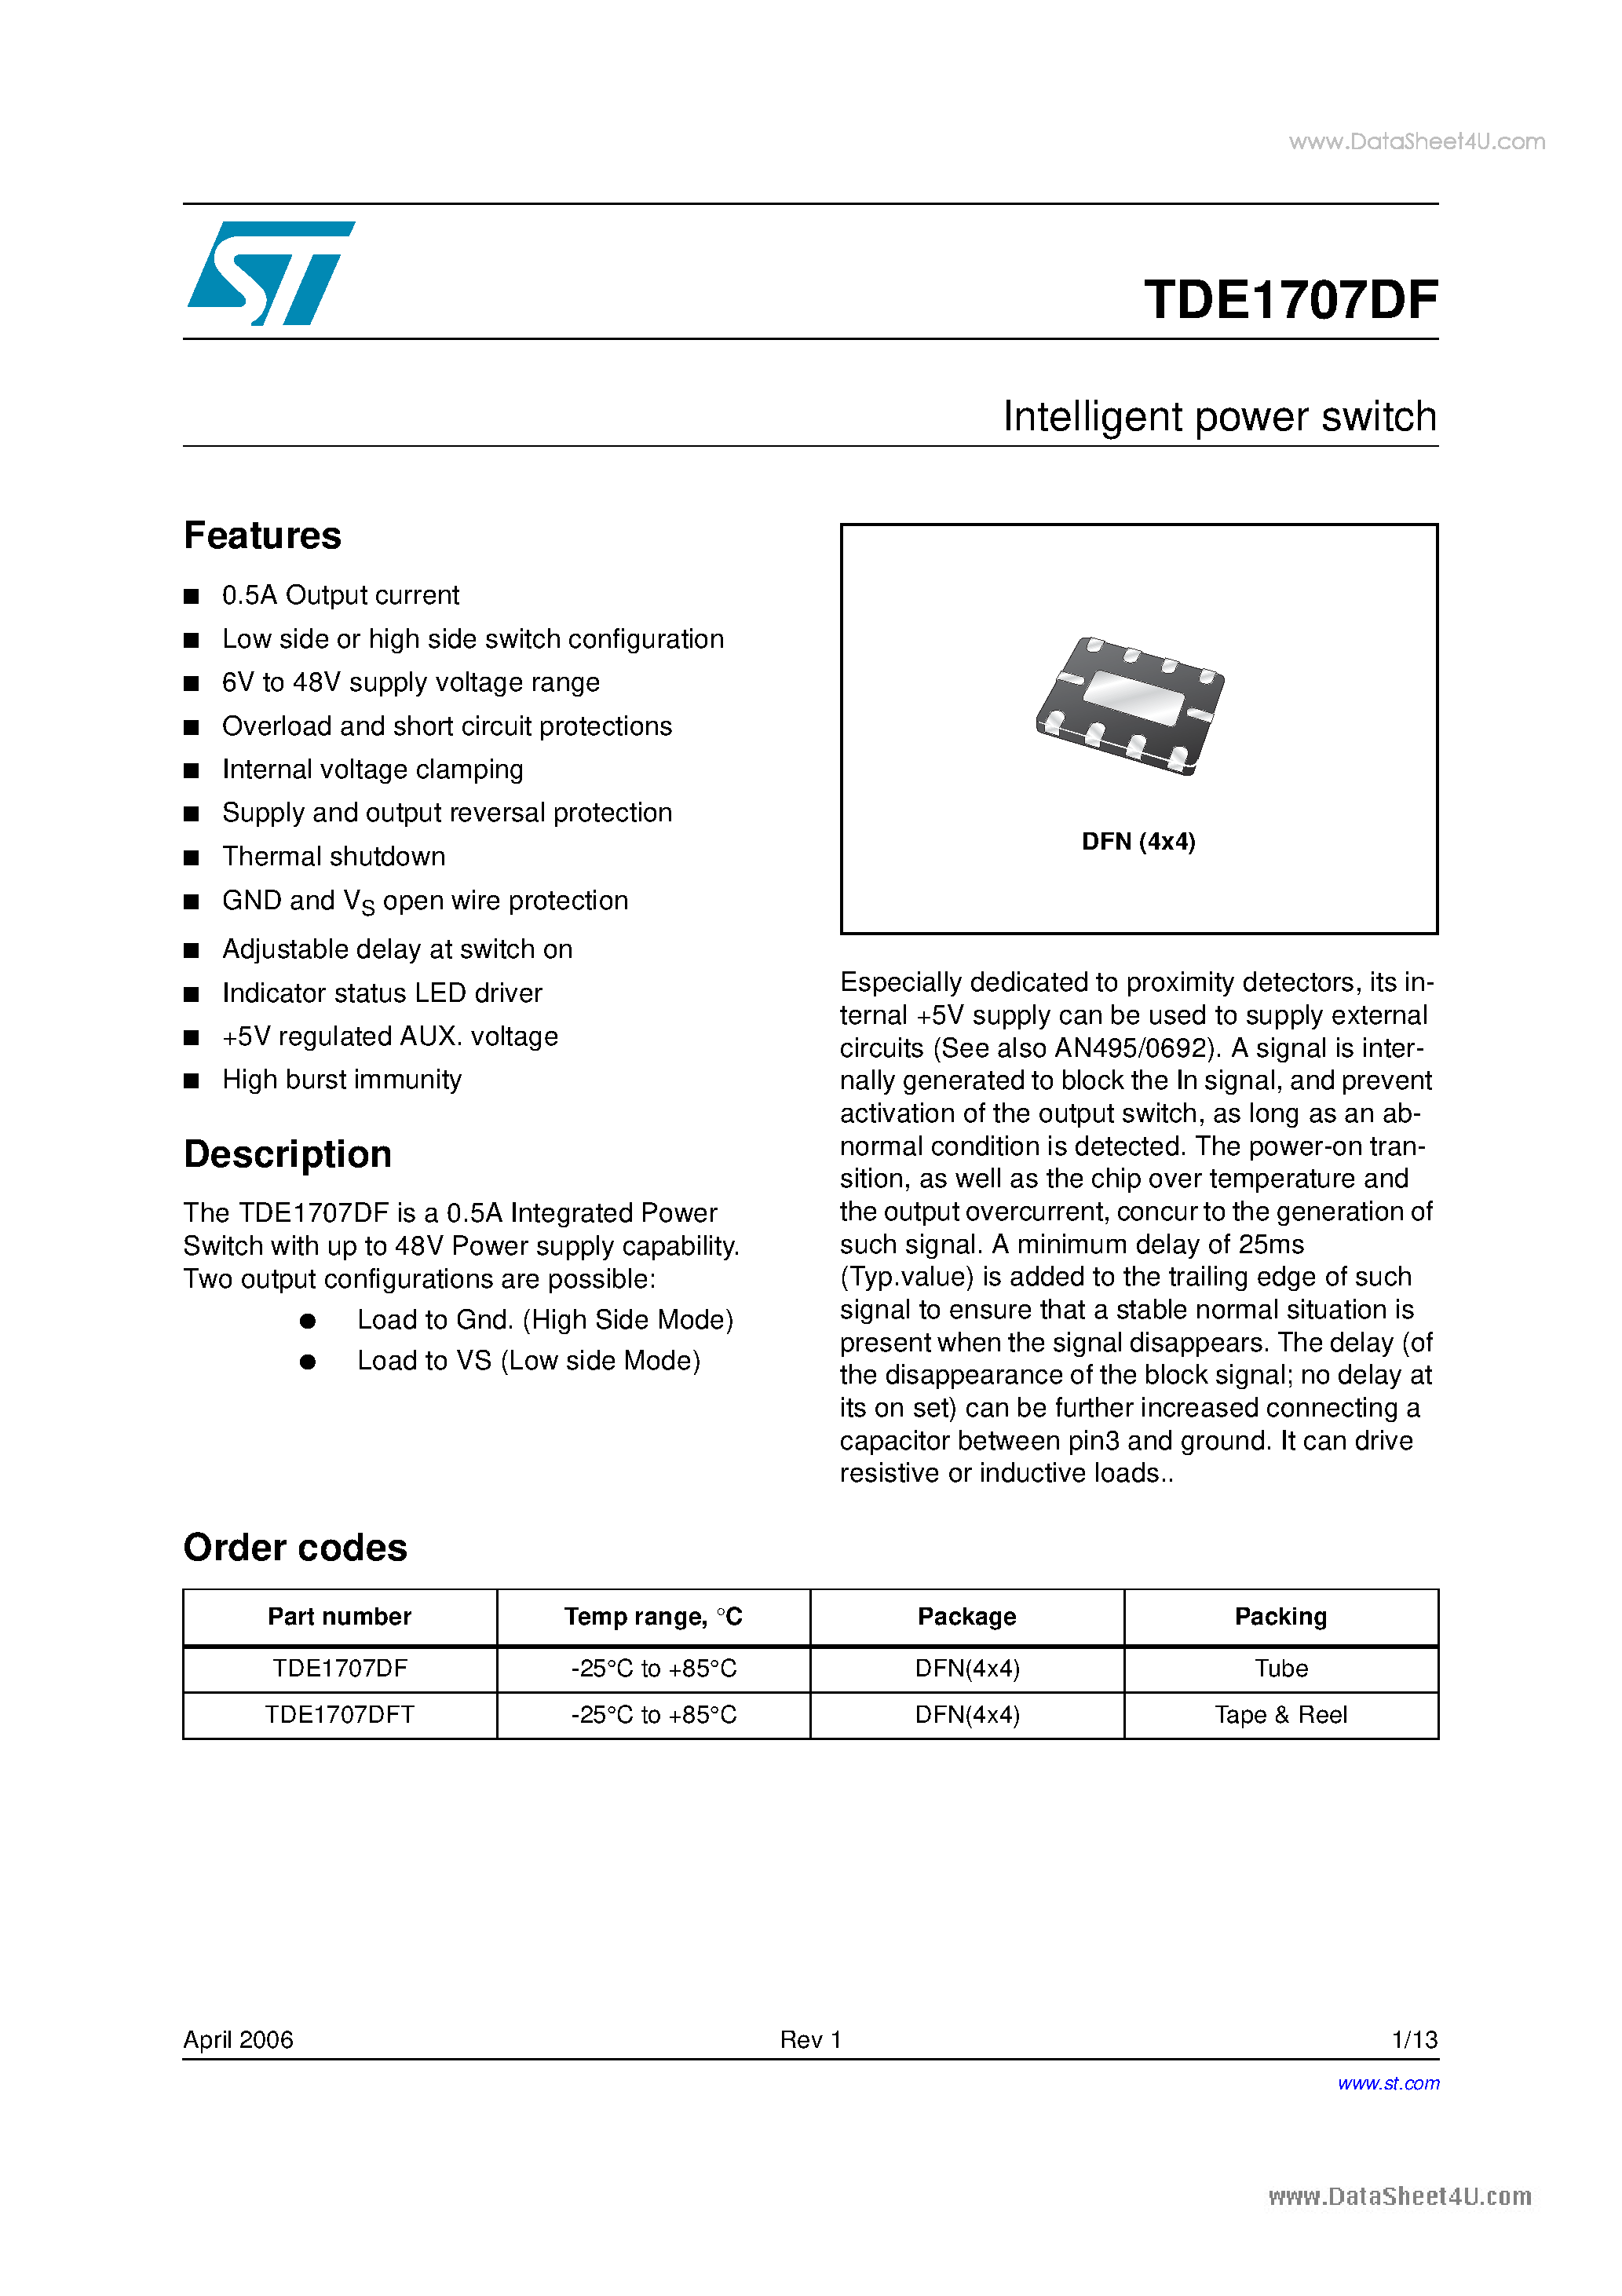 Datasheet TDE1707DF - lntelligent power switch page 1